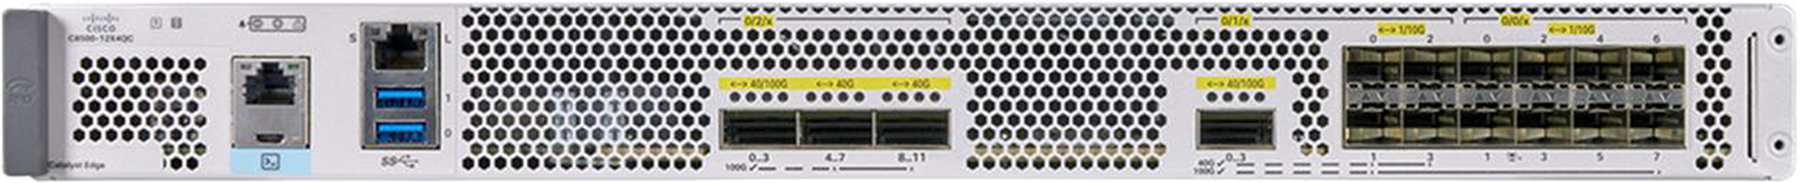 C8500-12X with 12x 1/10GE ports